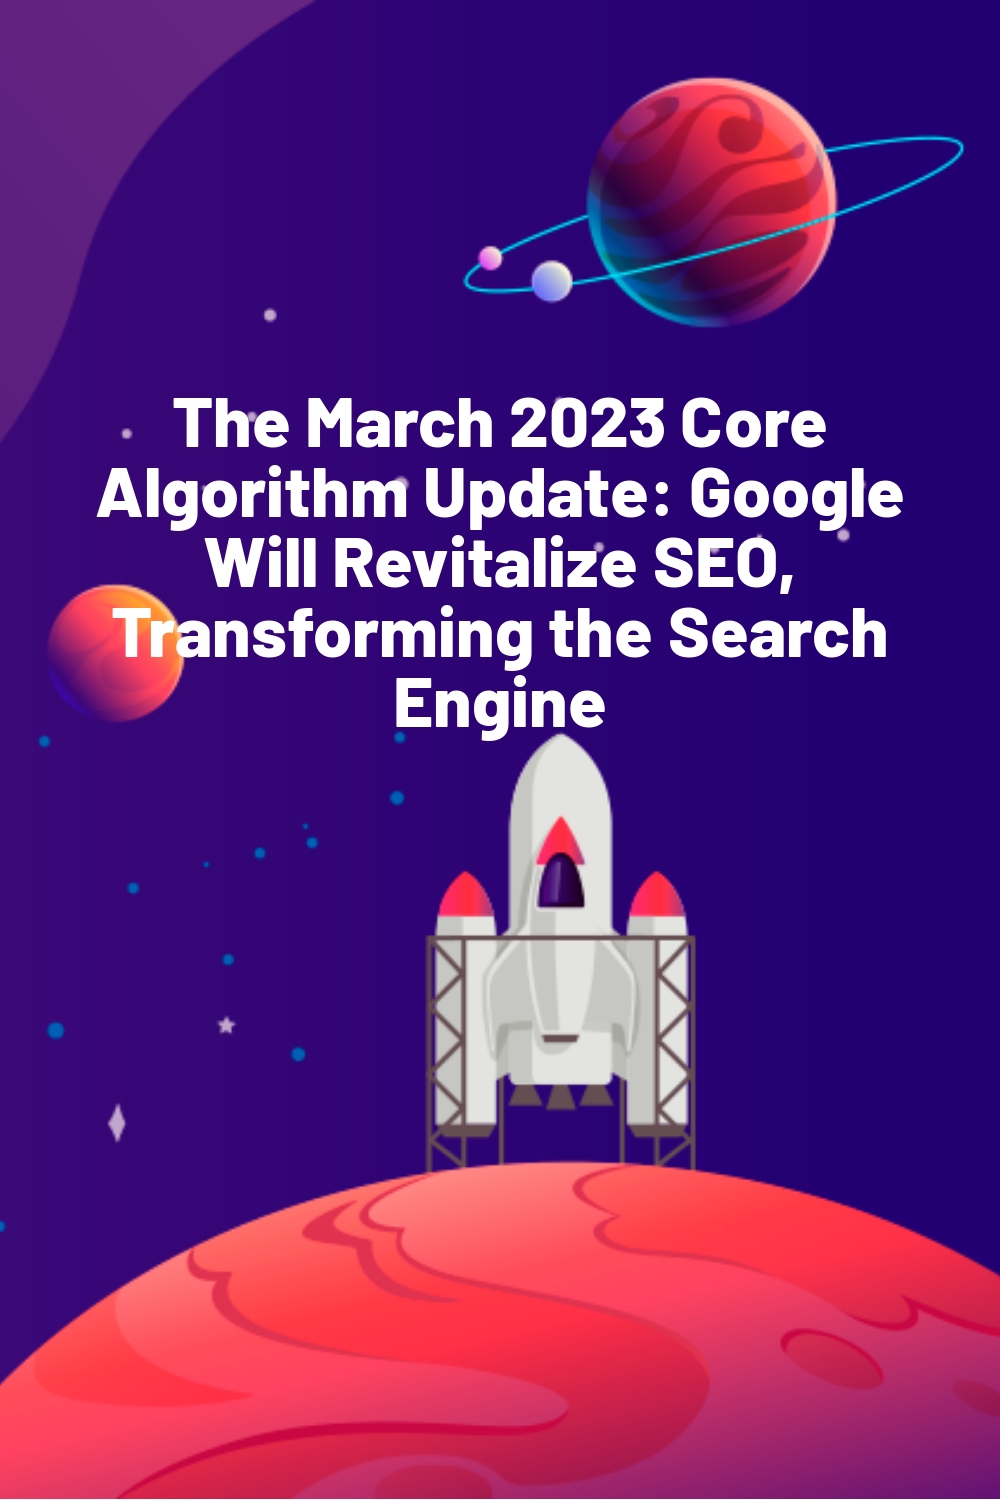 The March 2023 Core Algorithm Update: Google Will Revitalize SEO, Transforming the Search Engine